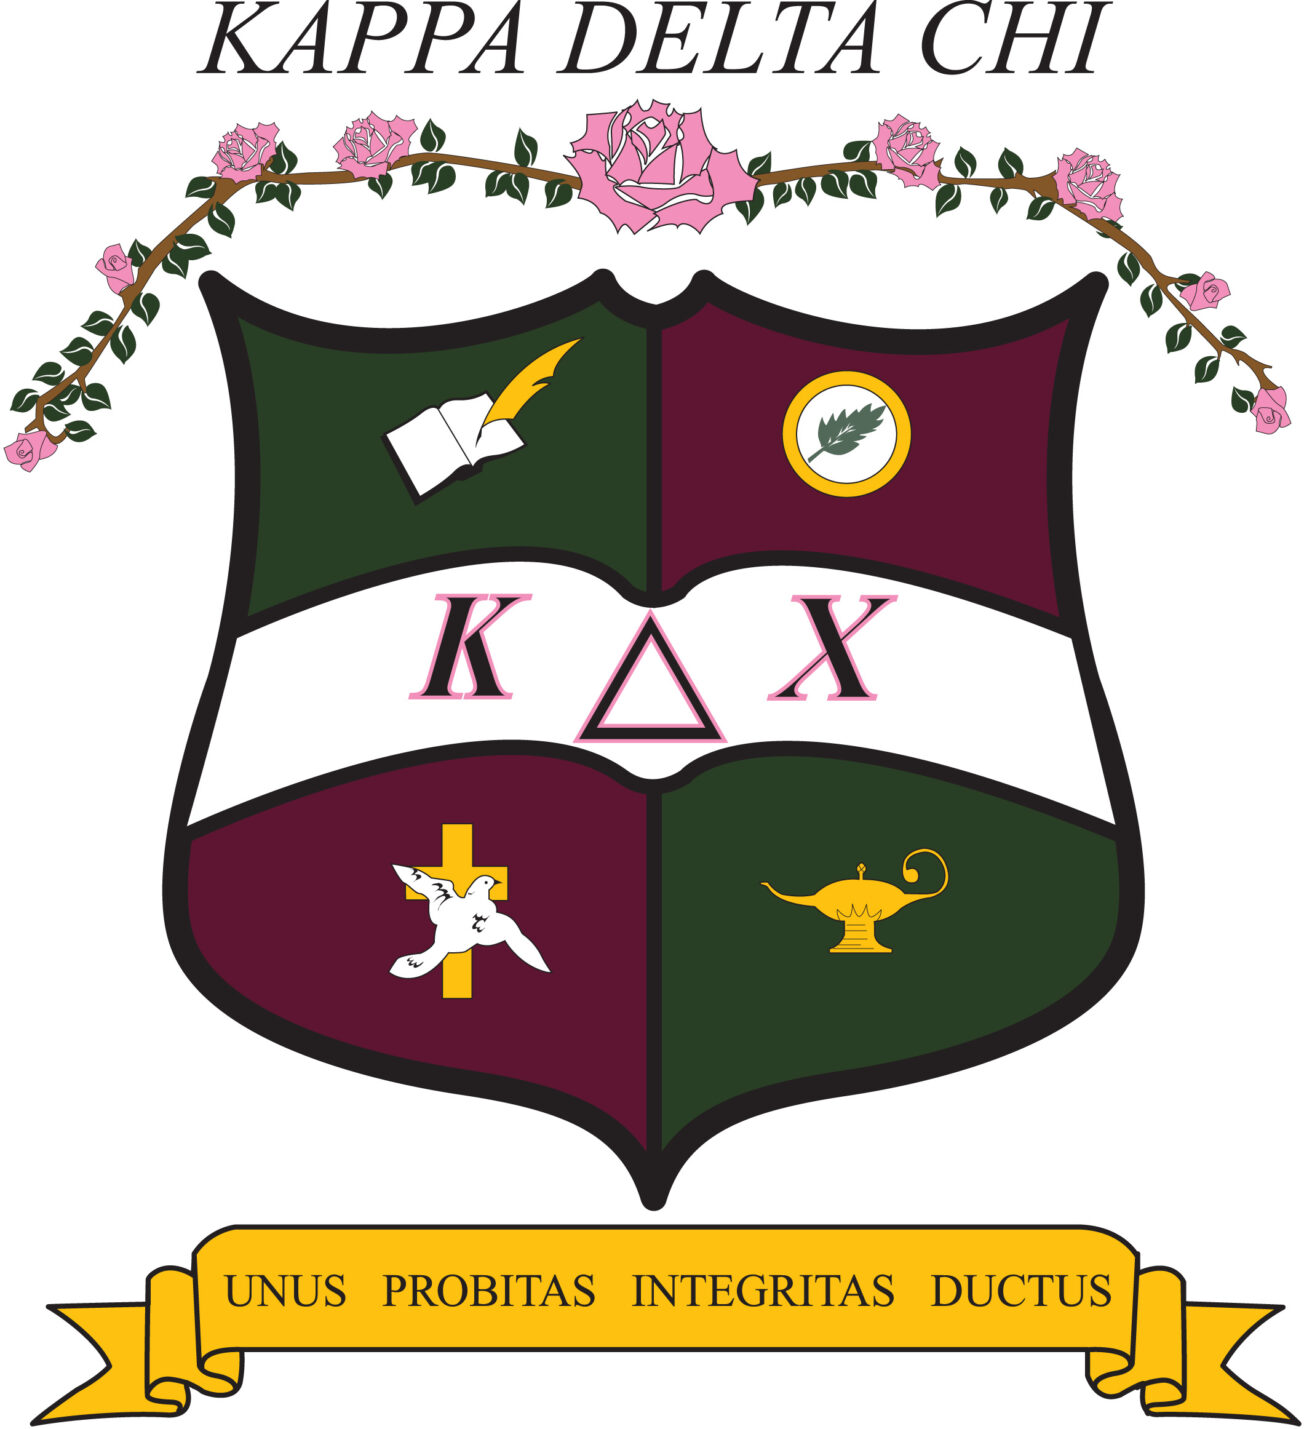 Kappa Delta Chi Sorority crest.